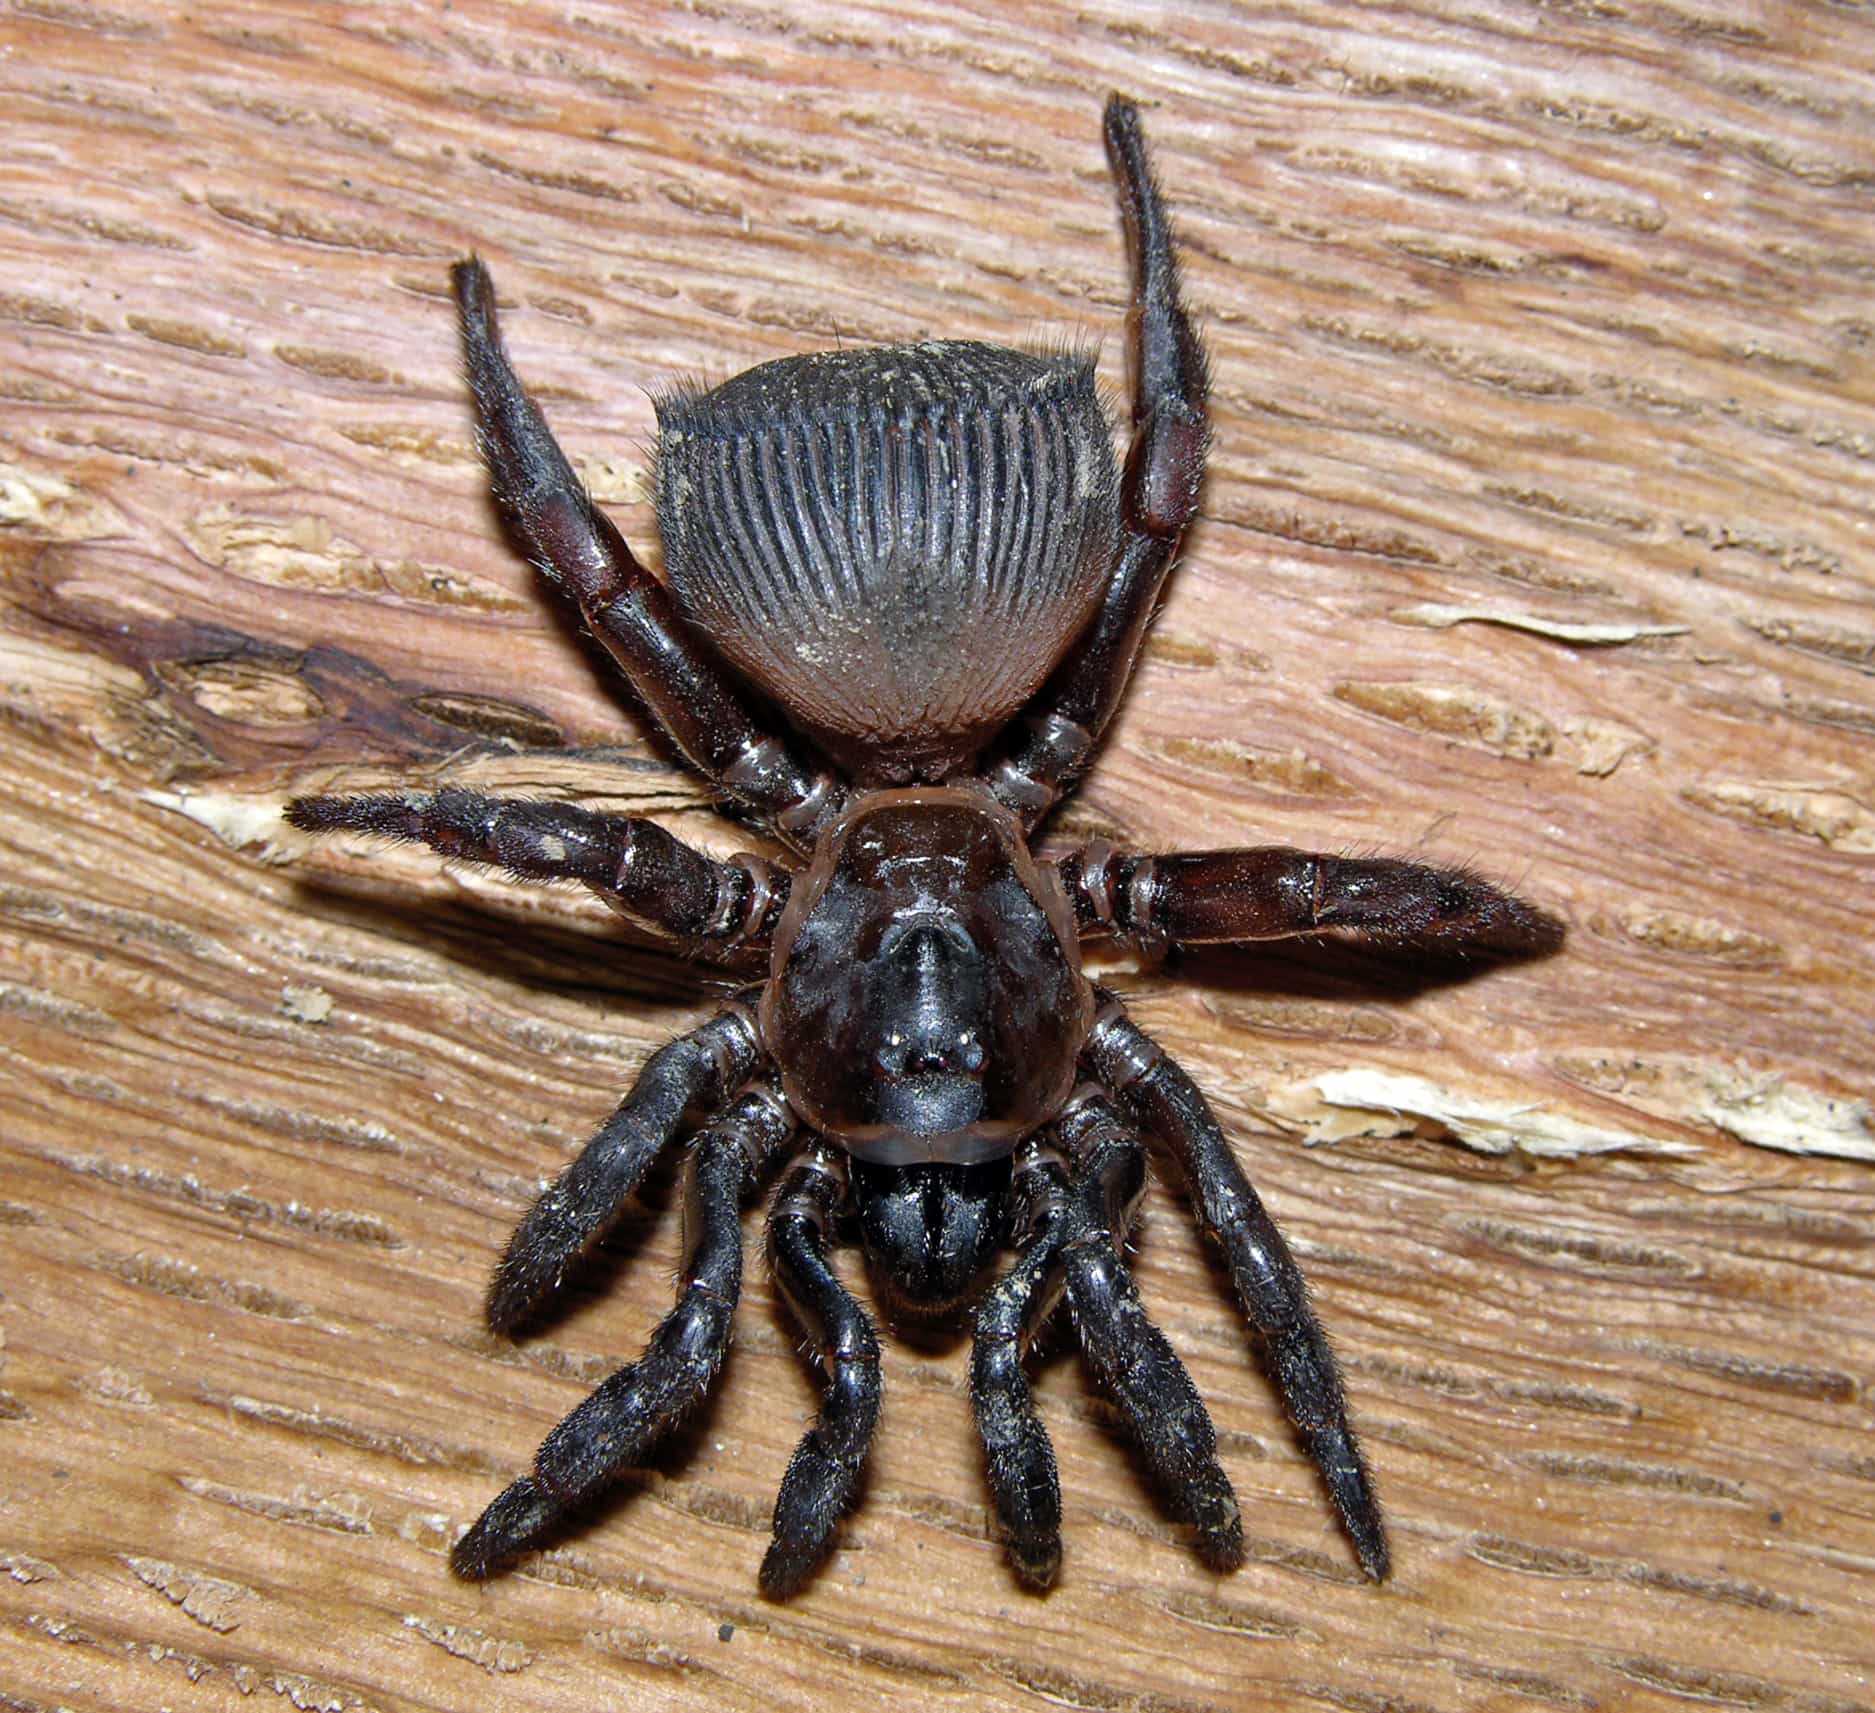 Cyclocosmia-truncata-Hentz-1841-Ravine-trapdoor-spider-female-Santiago-Nuevo-Leon-Mexico.jpg